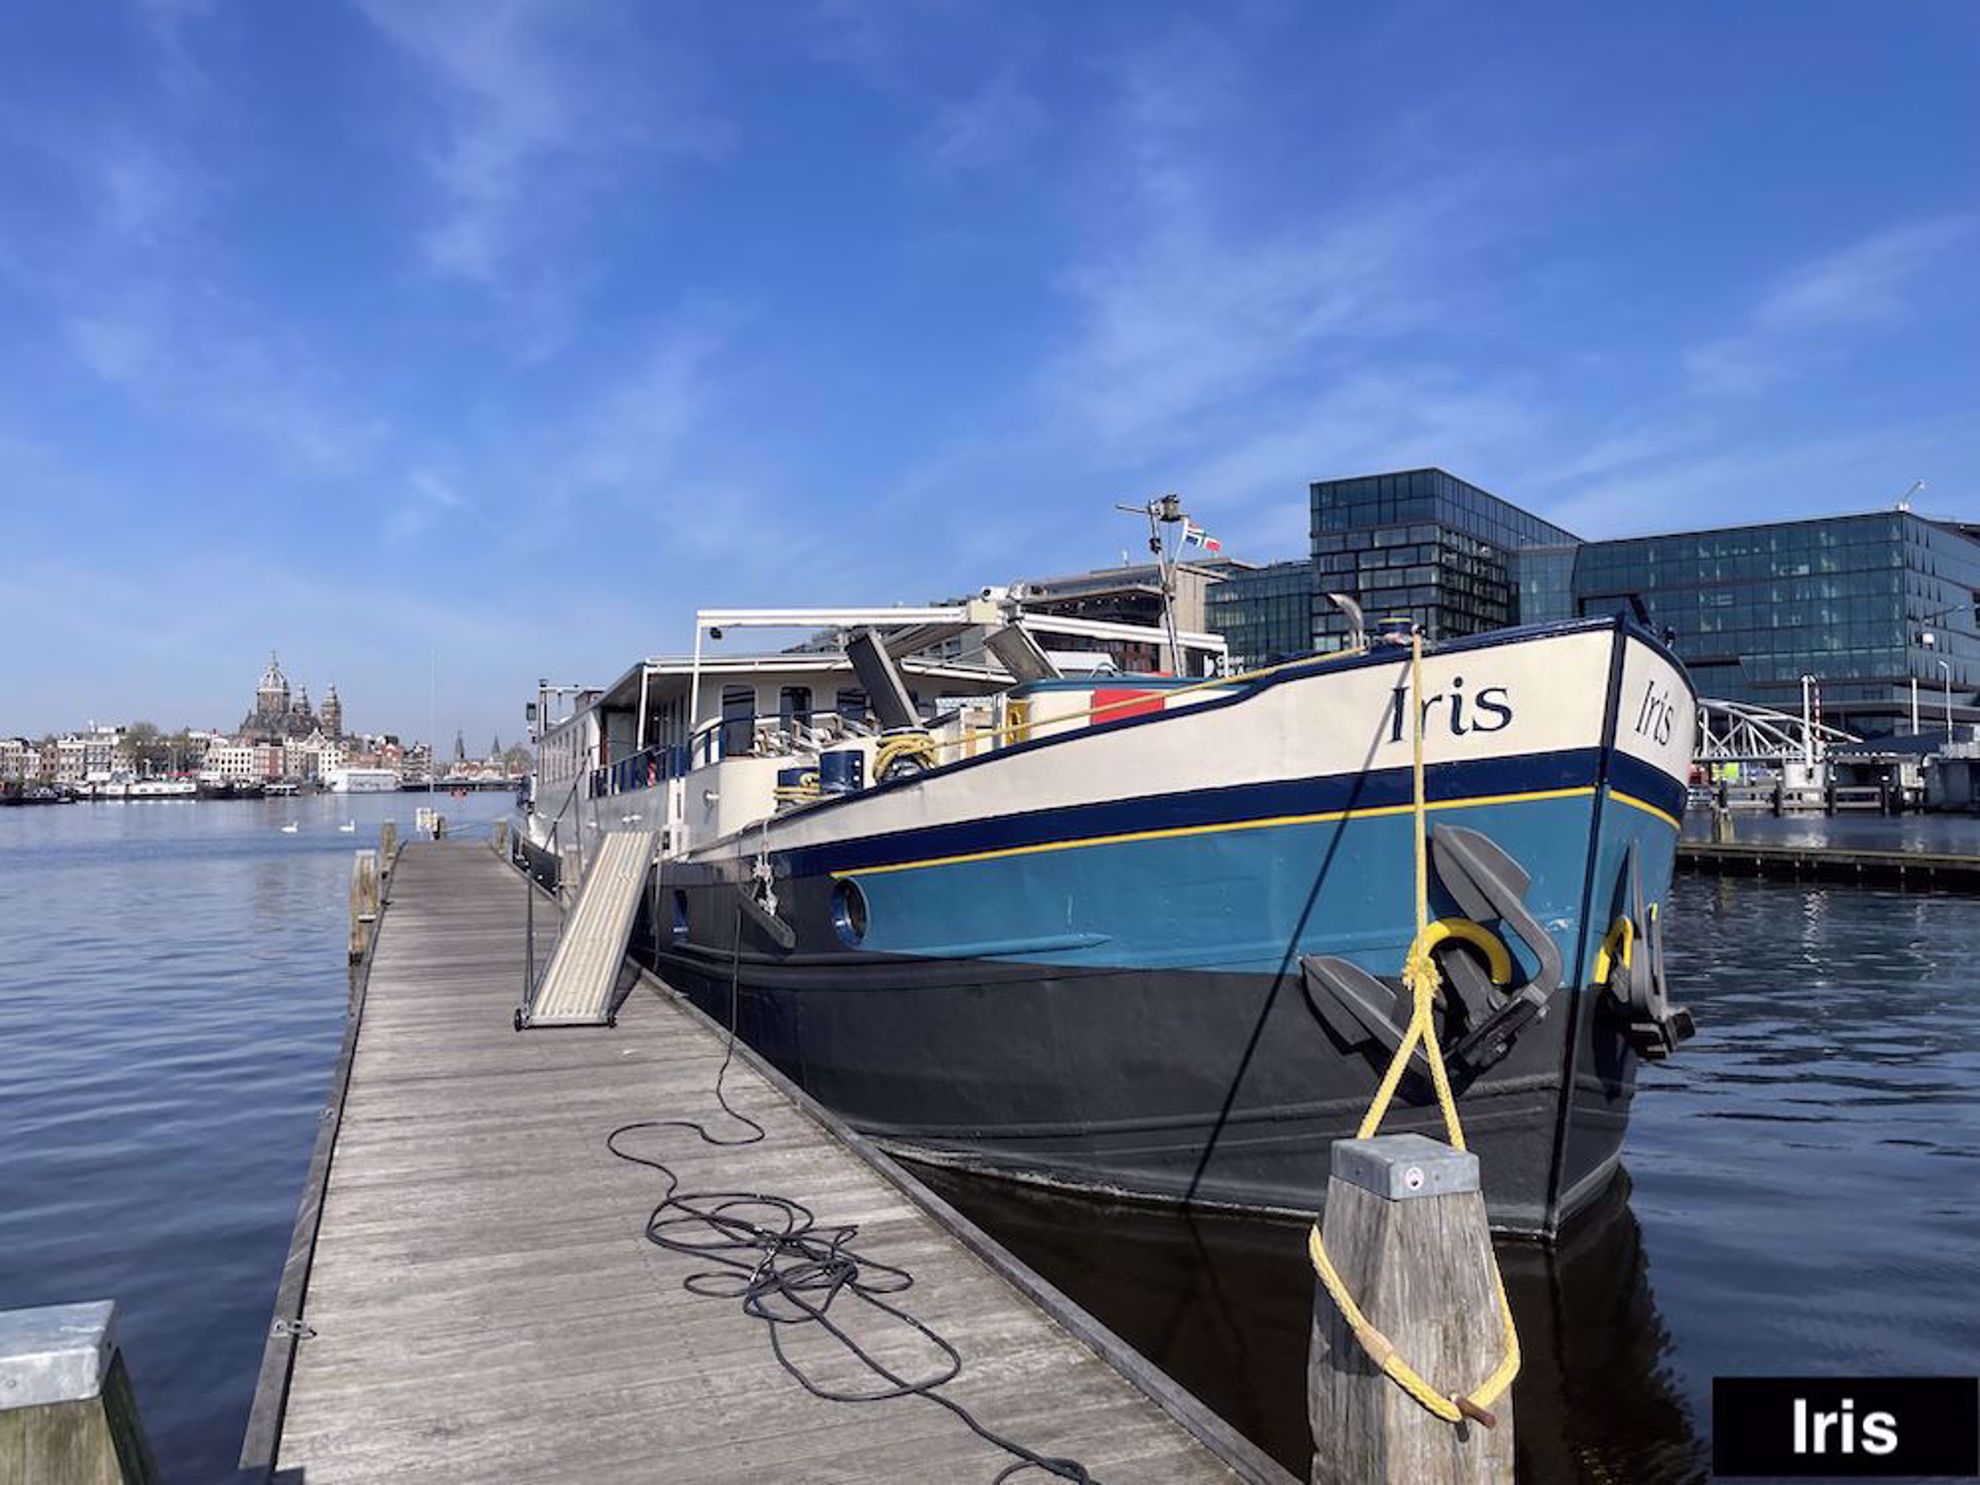 Iris docked in Amsterdam